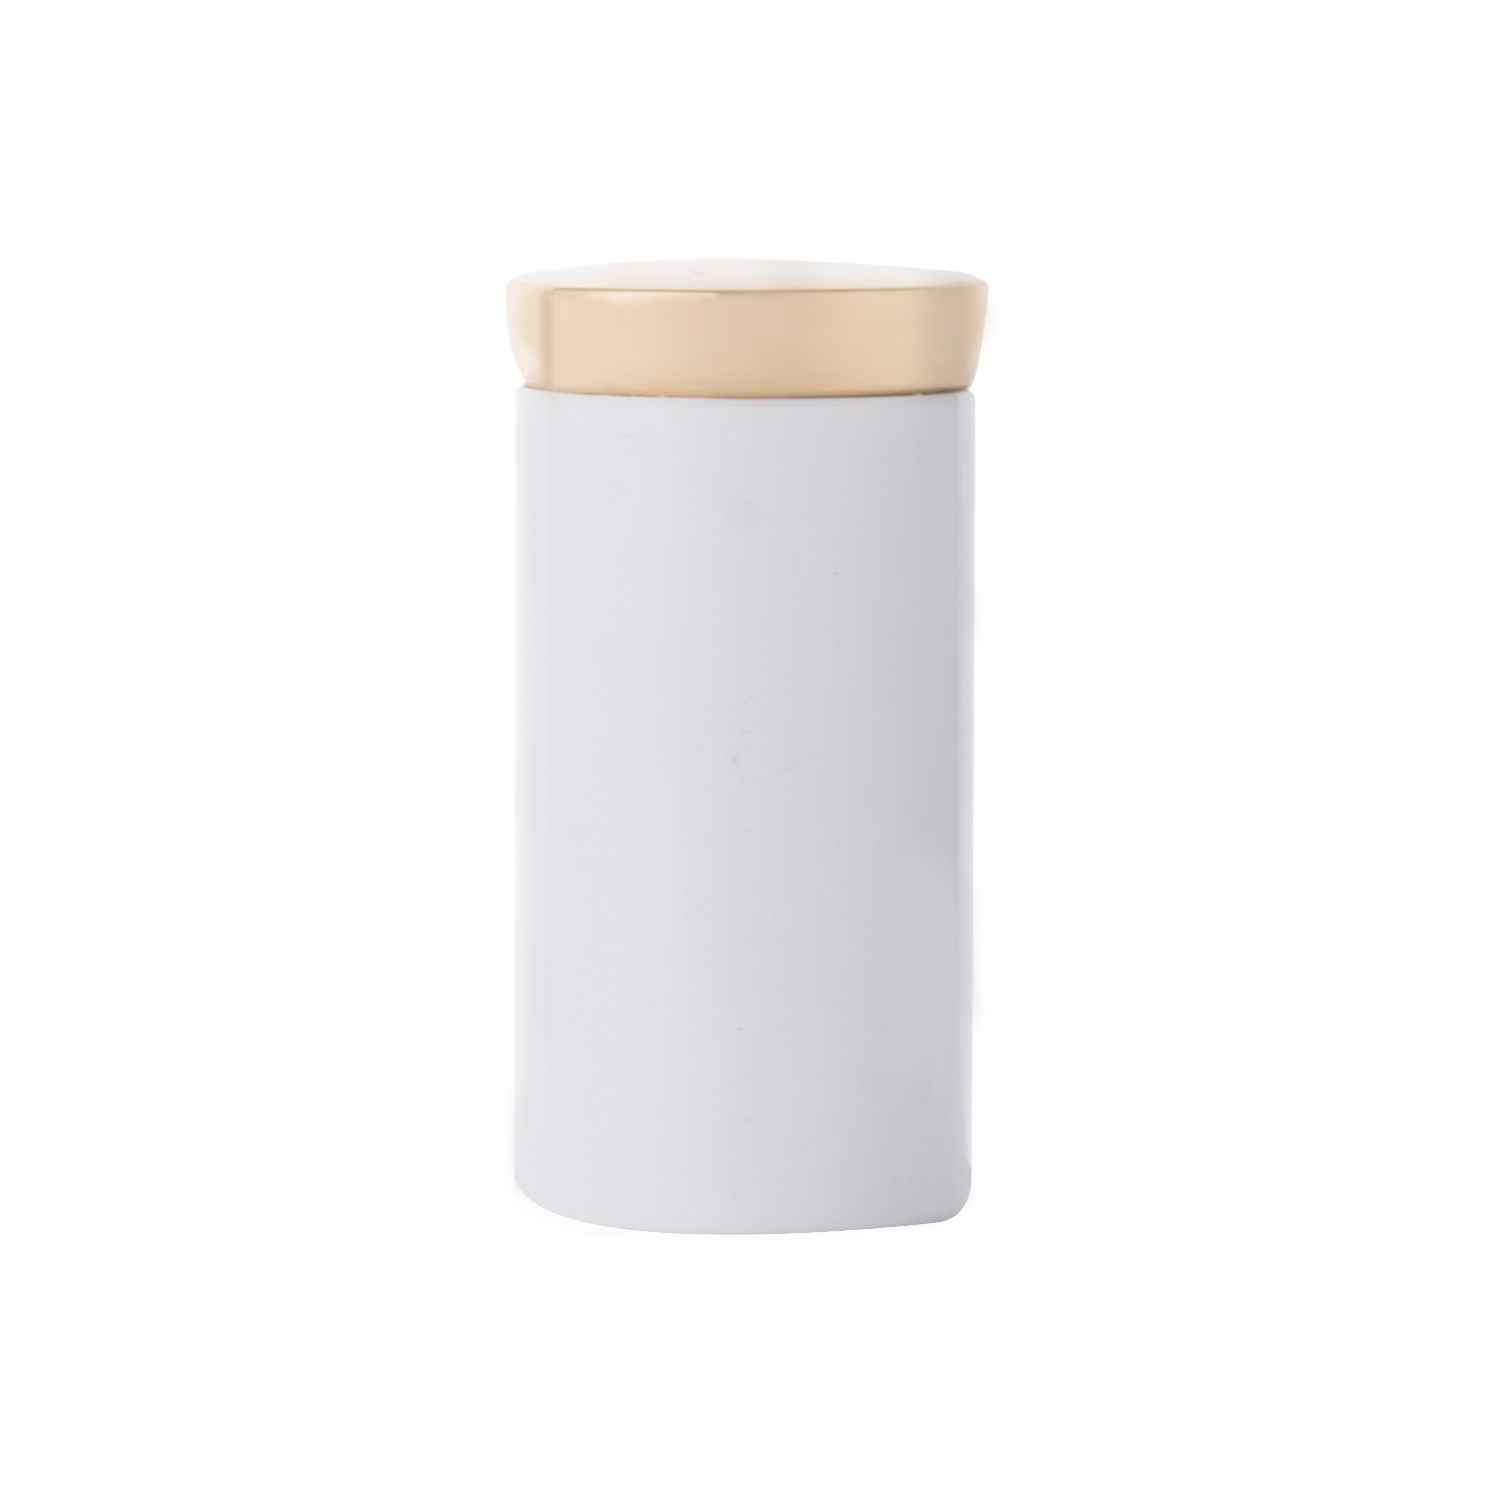 3.8g Empty Attractive Aluminum Glossy White Lipstick Container